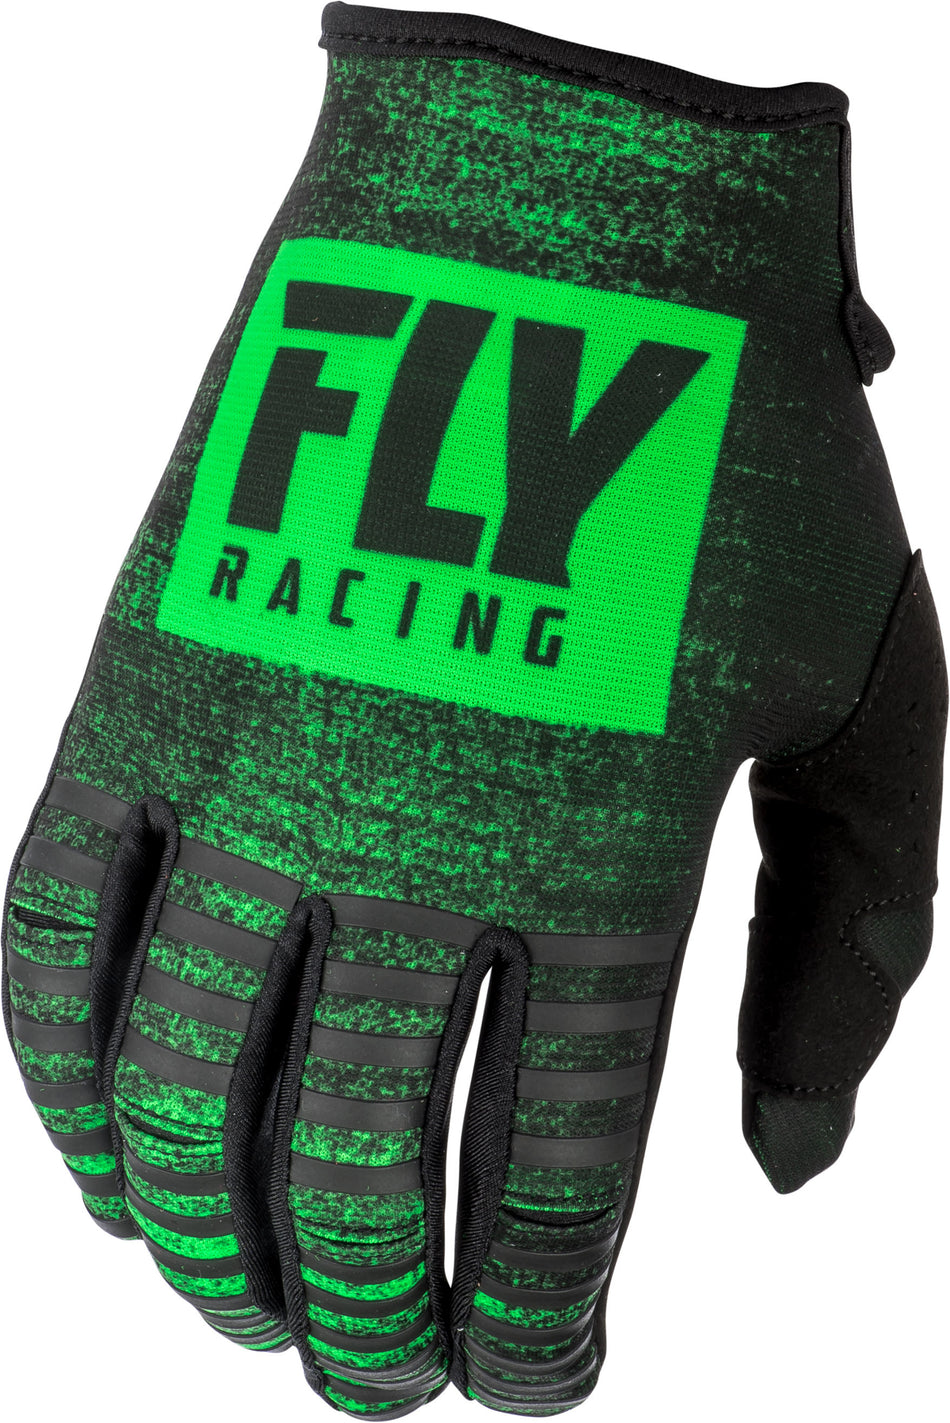 FLY RACING Kinetic Noiz Gloves Neon Green/Black Sz 07 372-51507